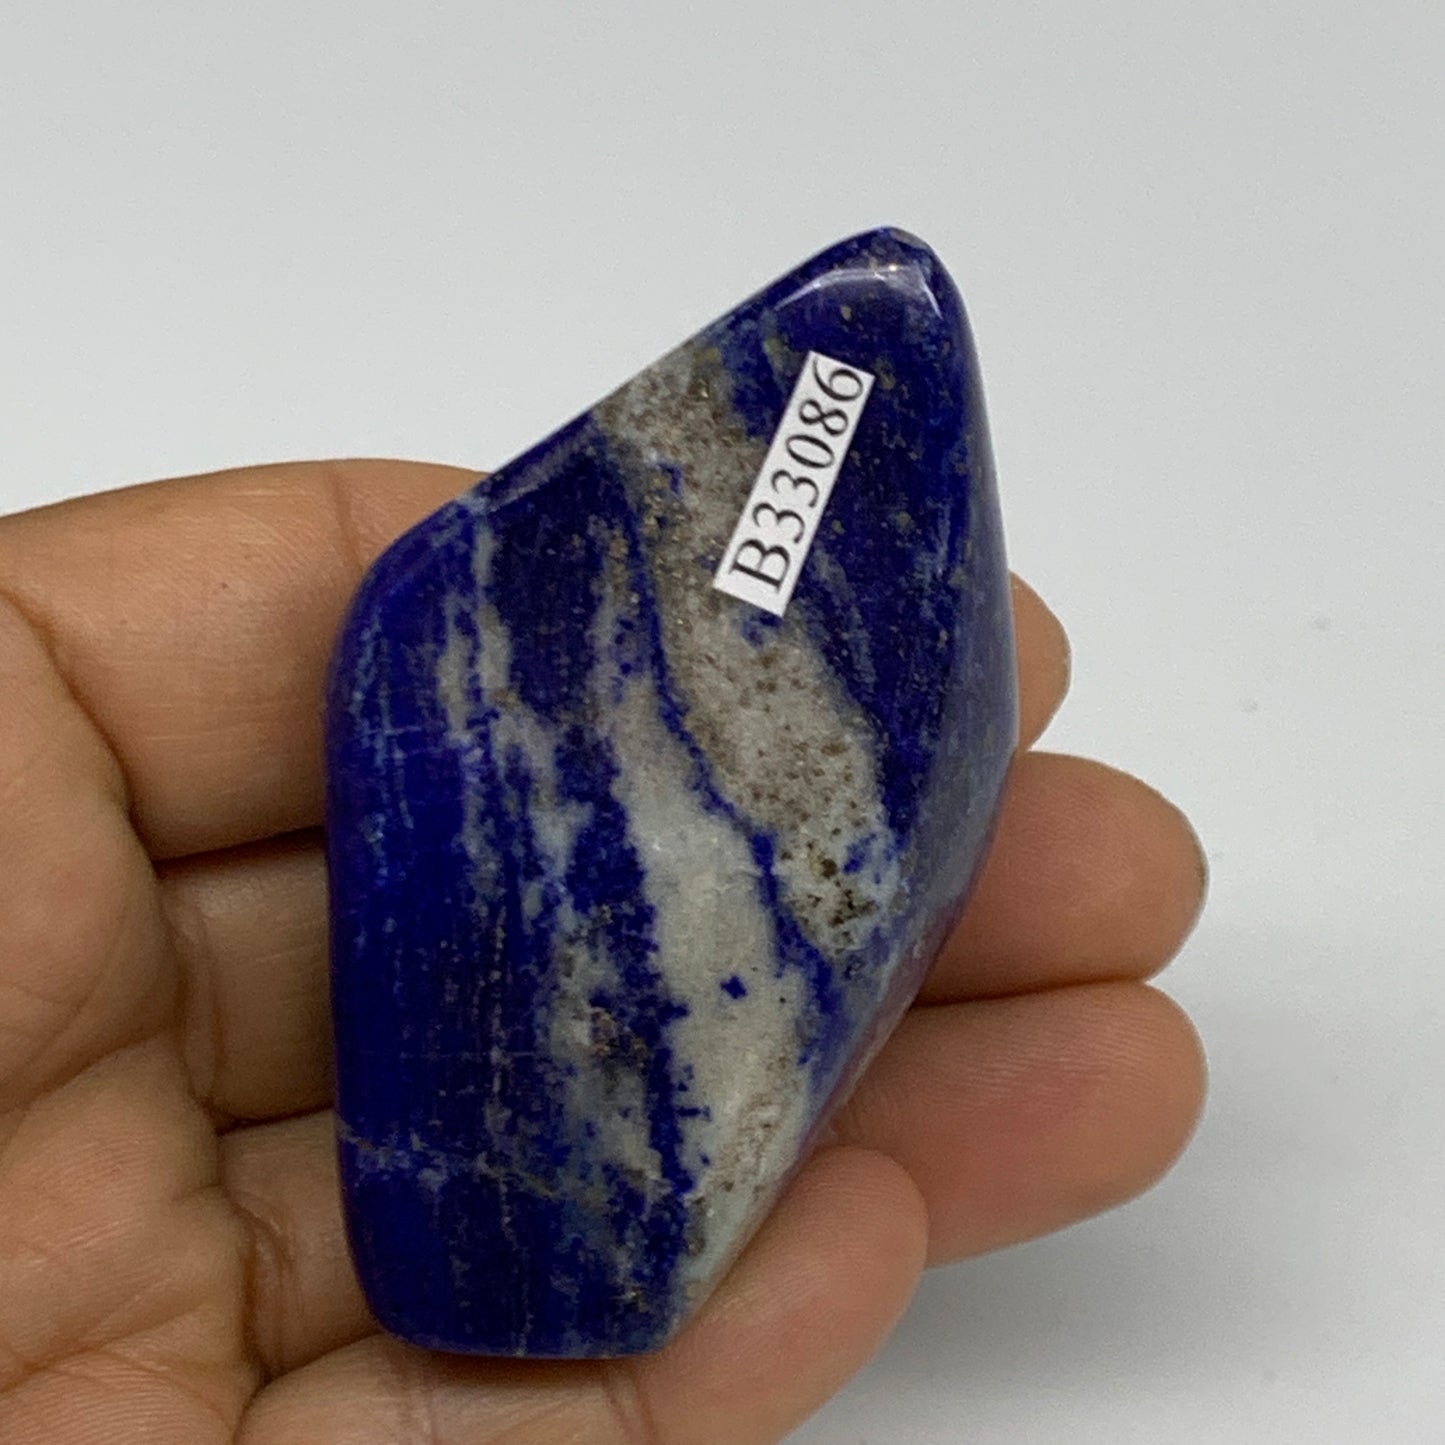 86.6g, 2.5"x1.6"x1.1",  Natural Freeform Lapis Lazuli from Afghanistan, B33086